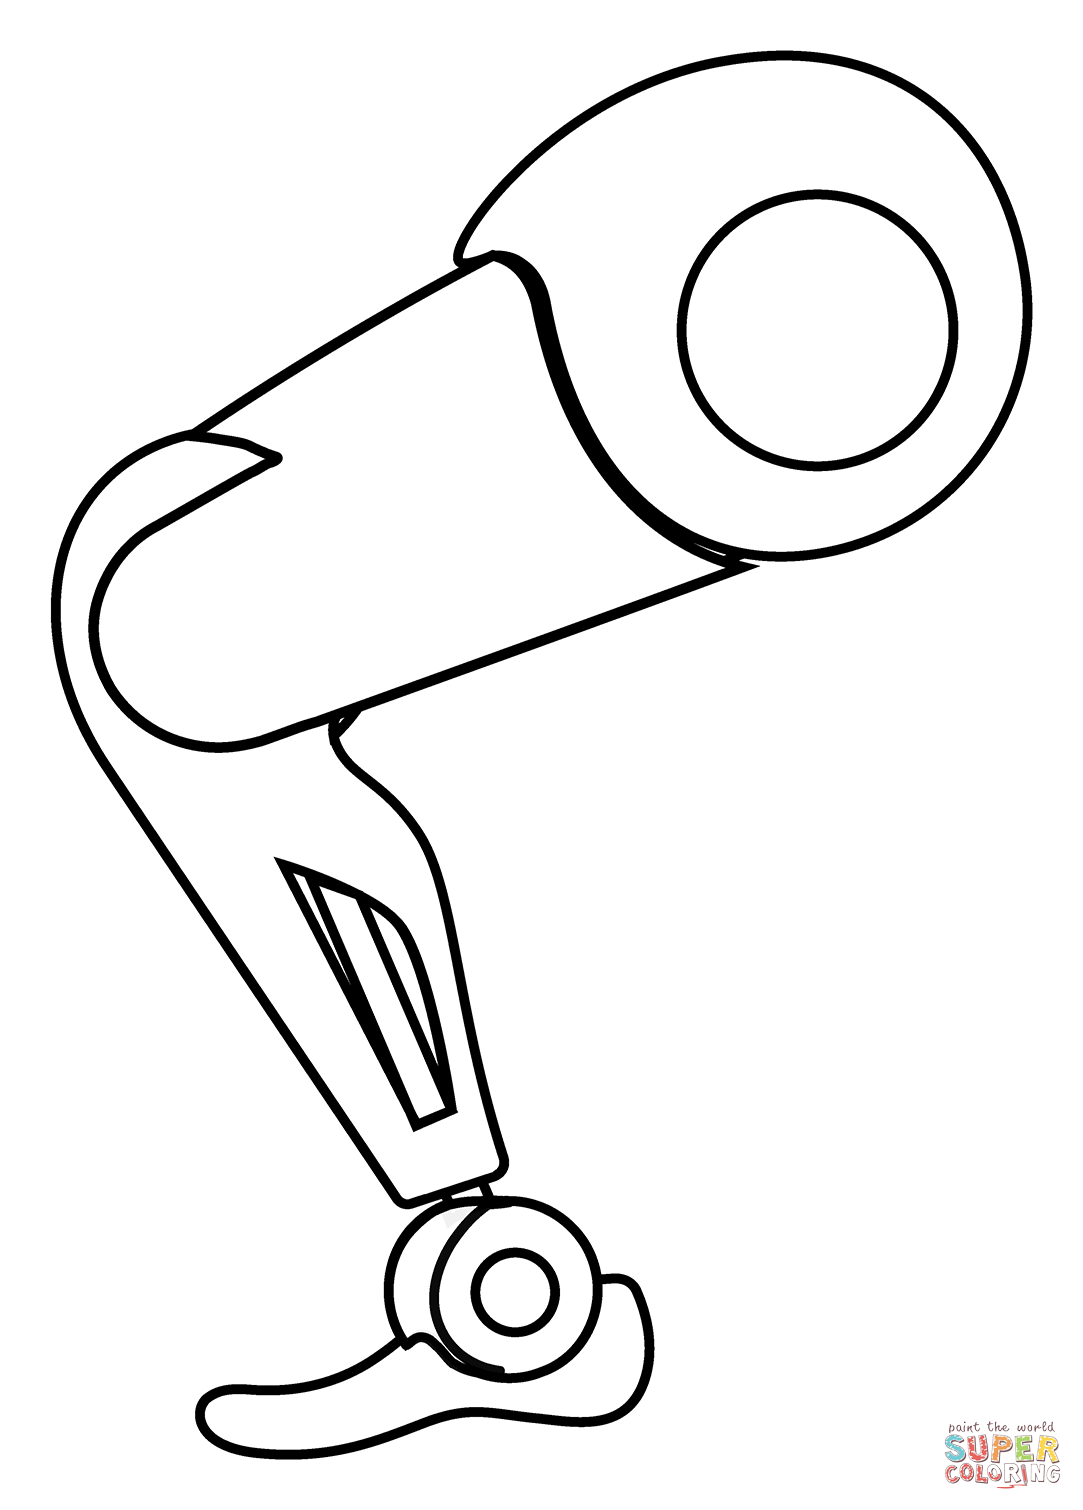 Mechanical Leg Emoji coloring page | Free Printable Coloring Pages